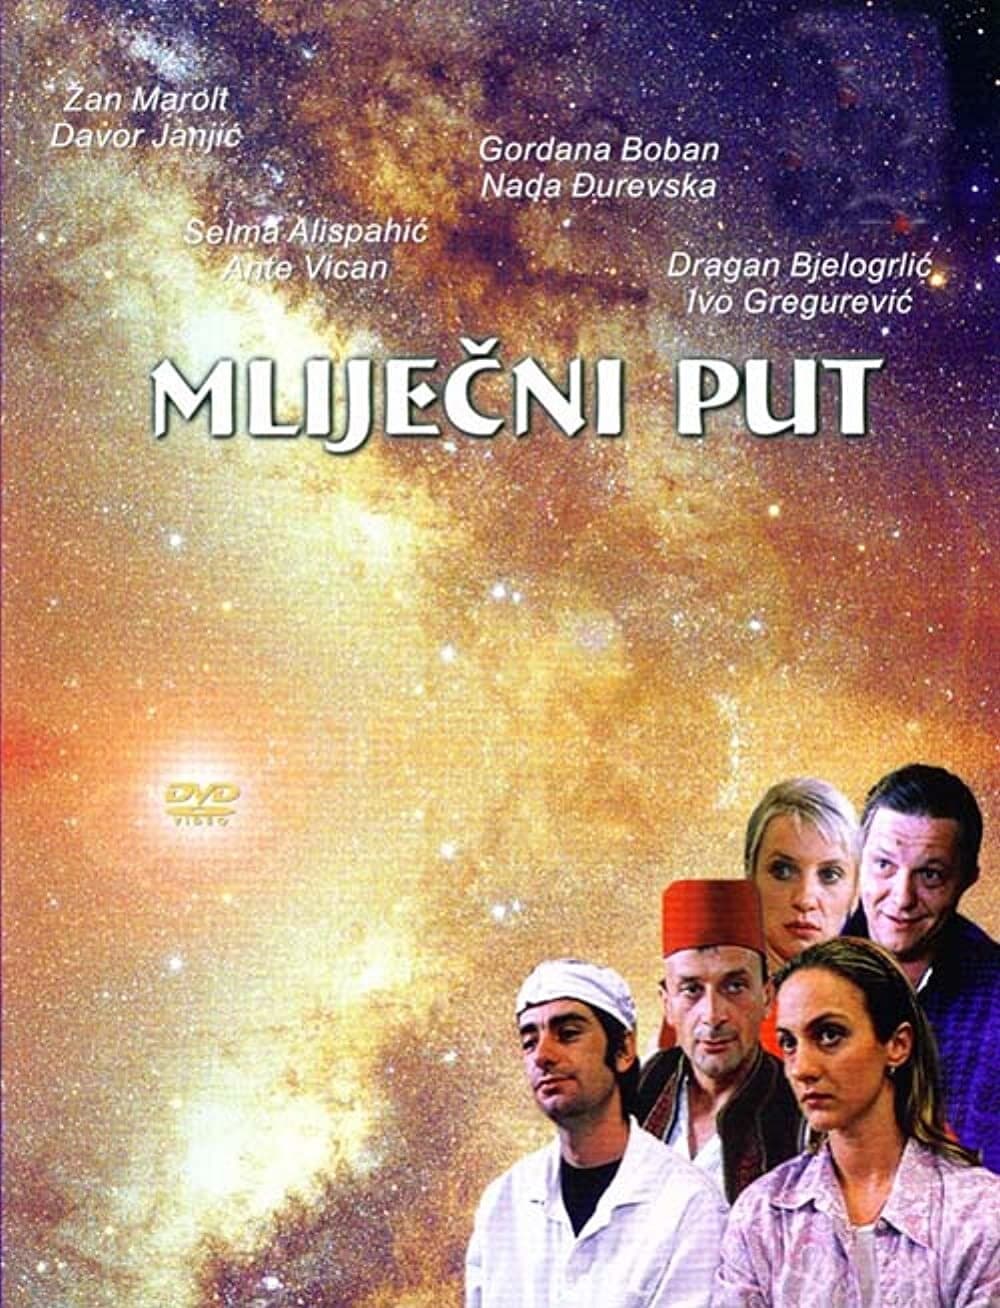 Milky Way (2000)